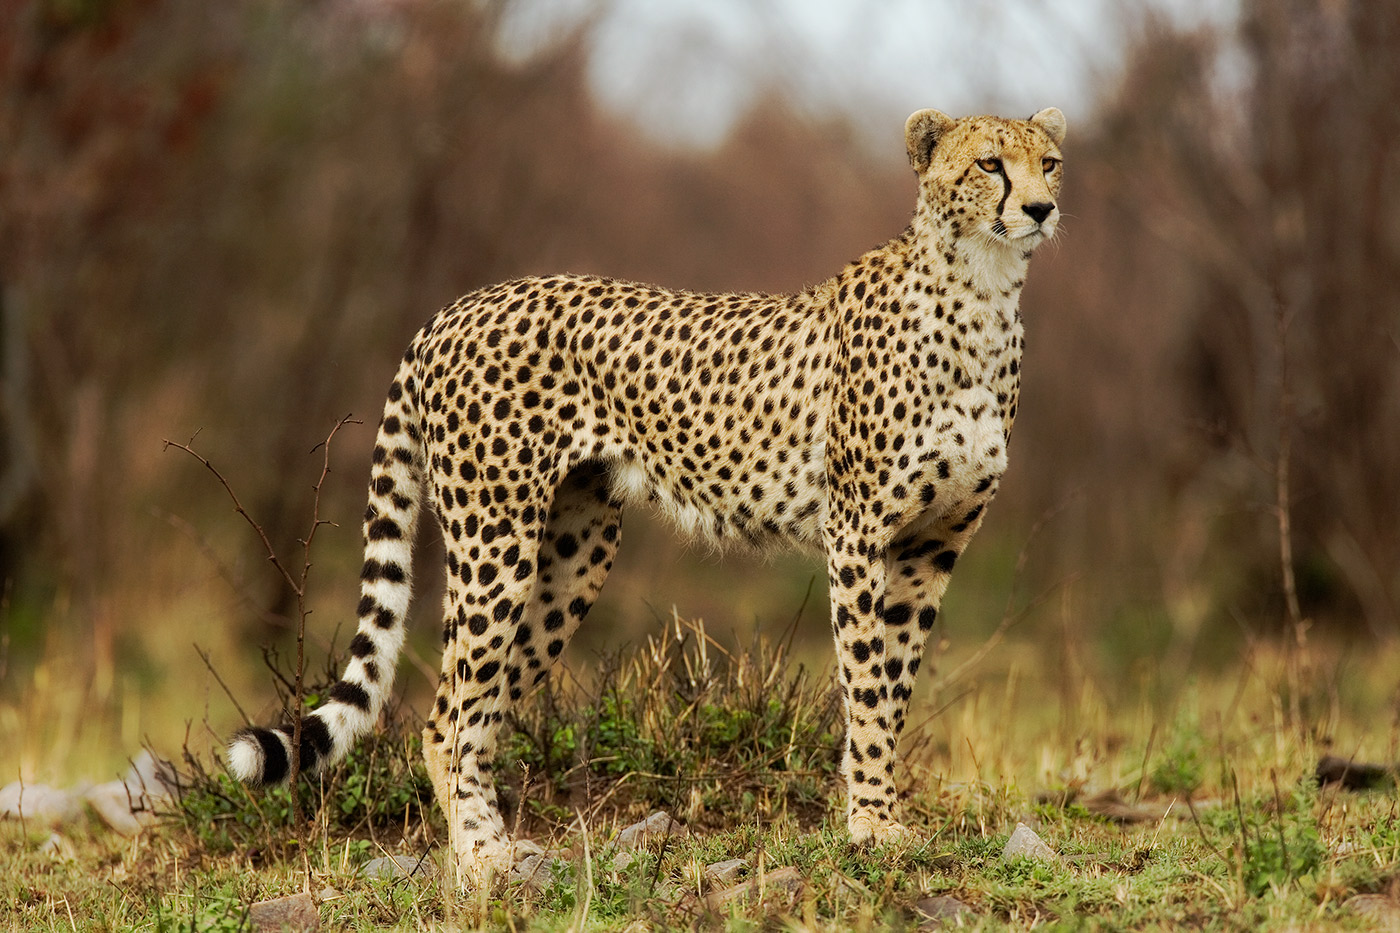 Cheetah staring down it’s prey in the Massai Mara, Kenya